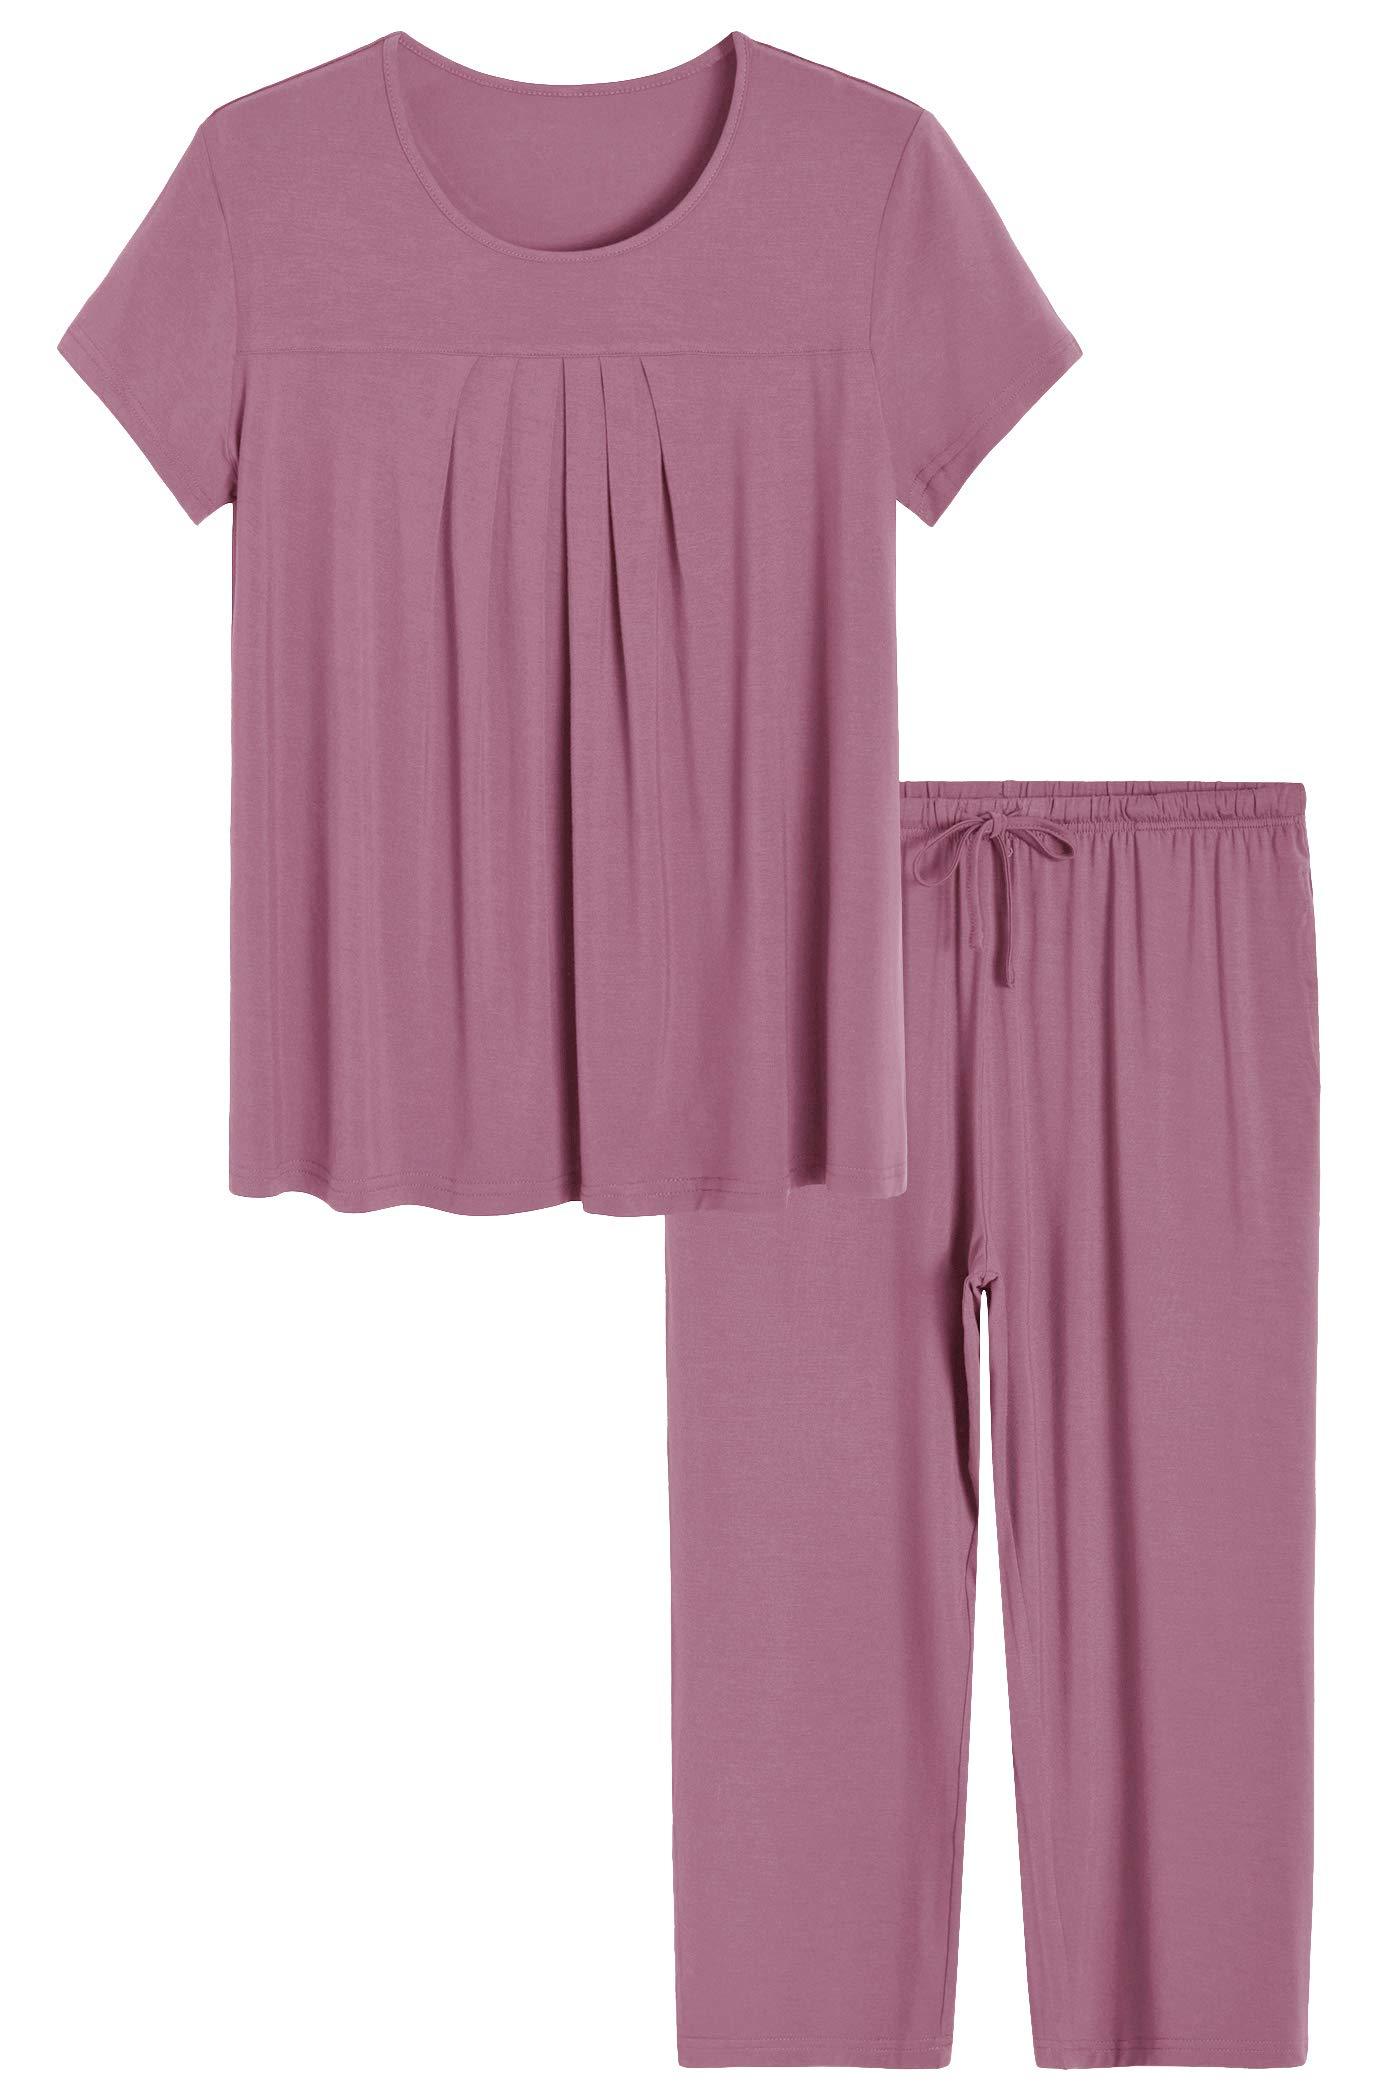 Latuza Women's Pleated Loungewear Top and Capris Pajamas Set 